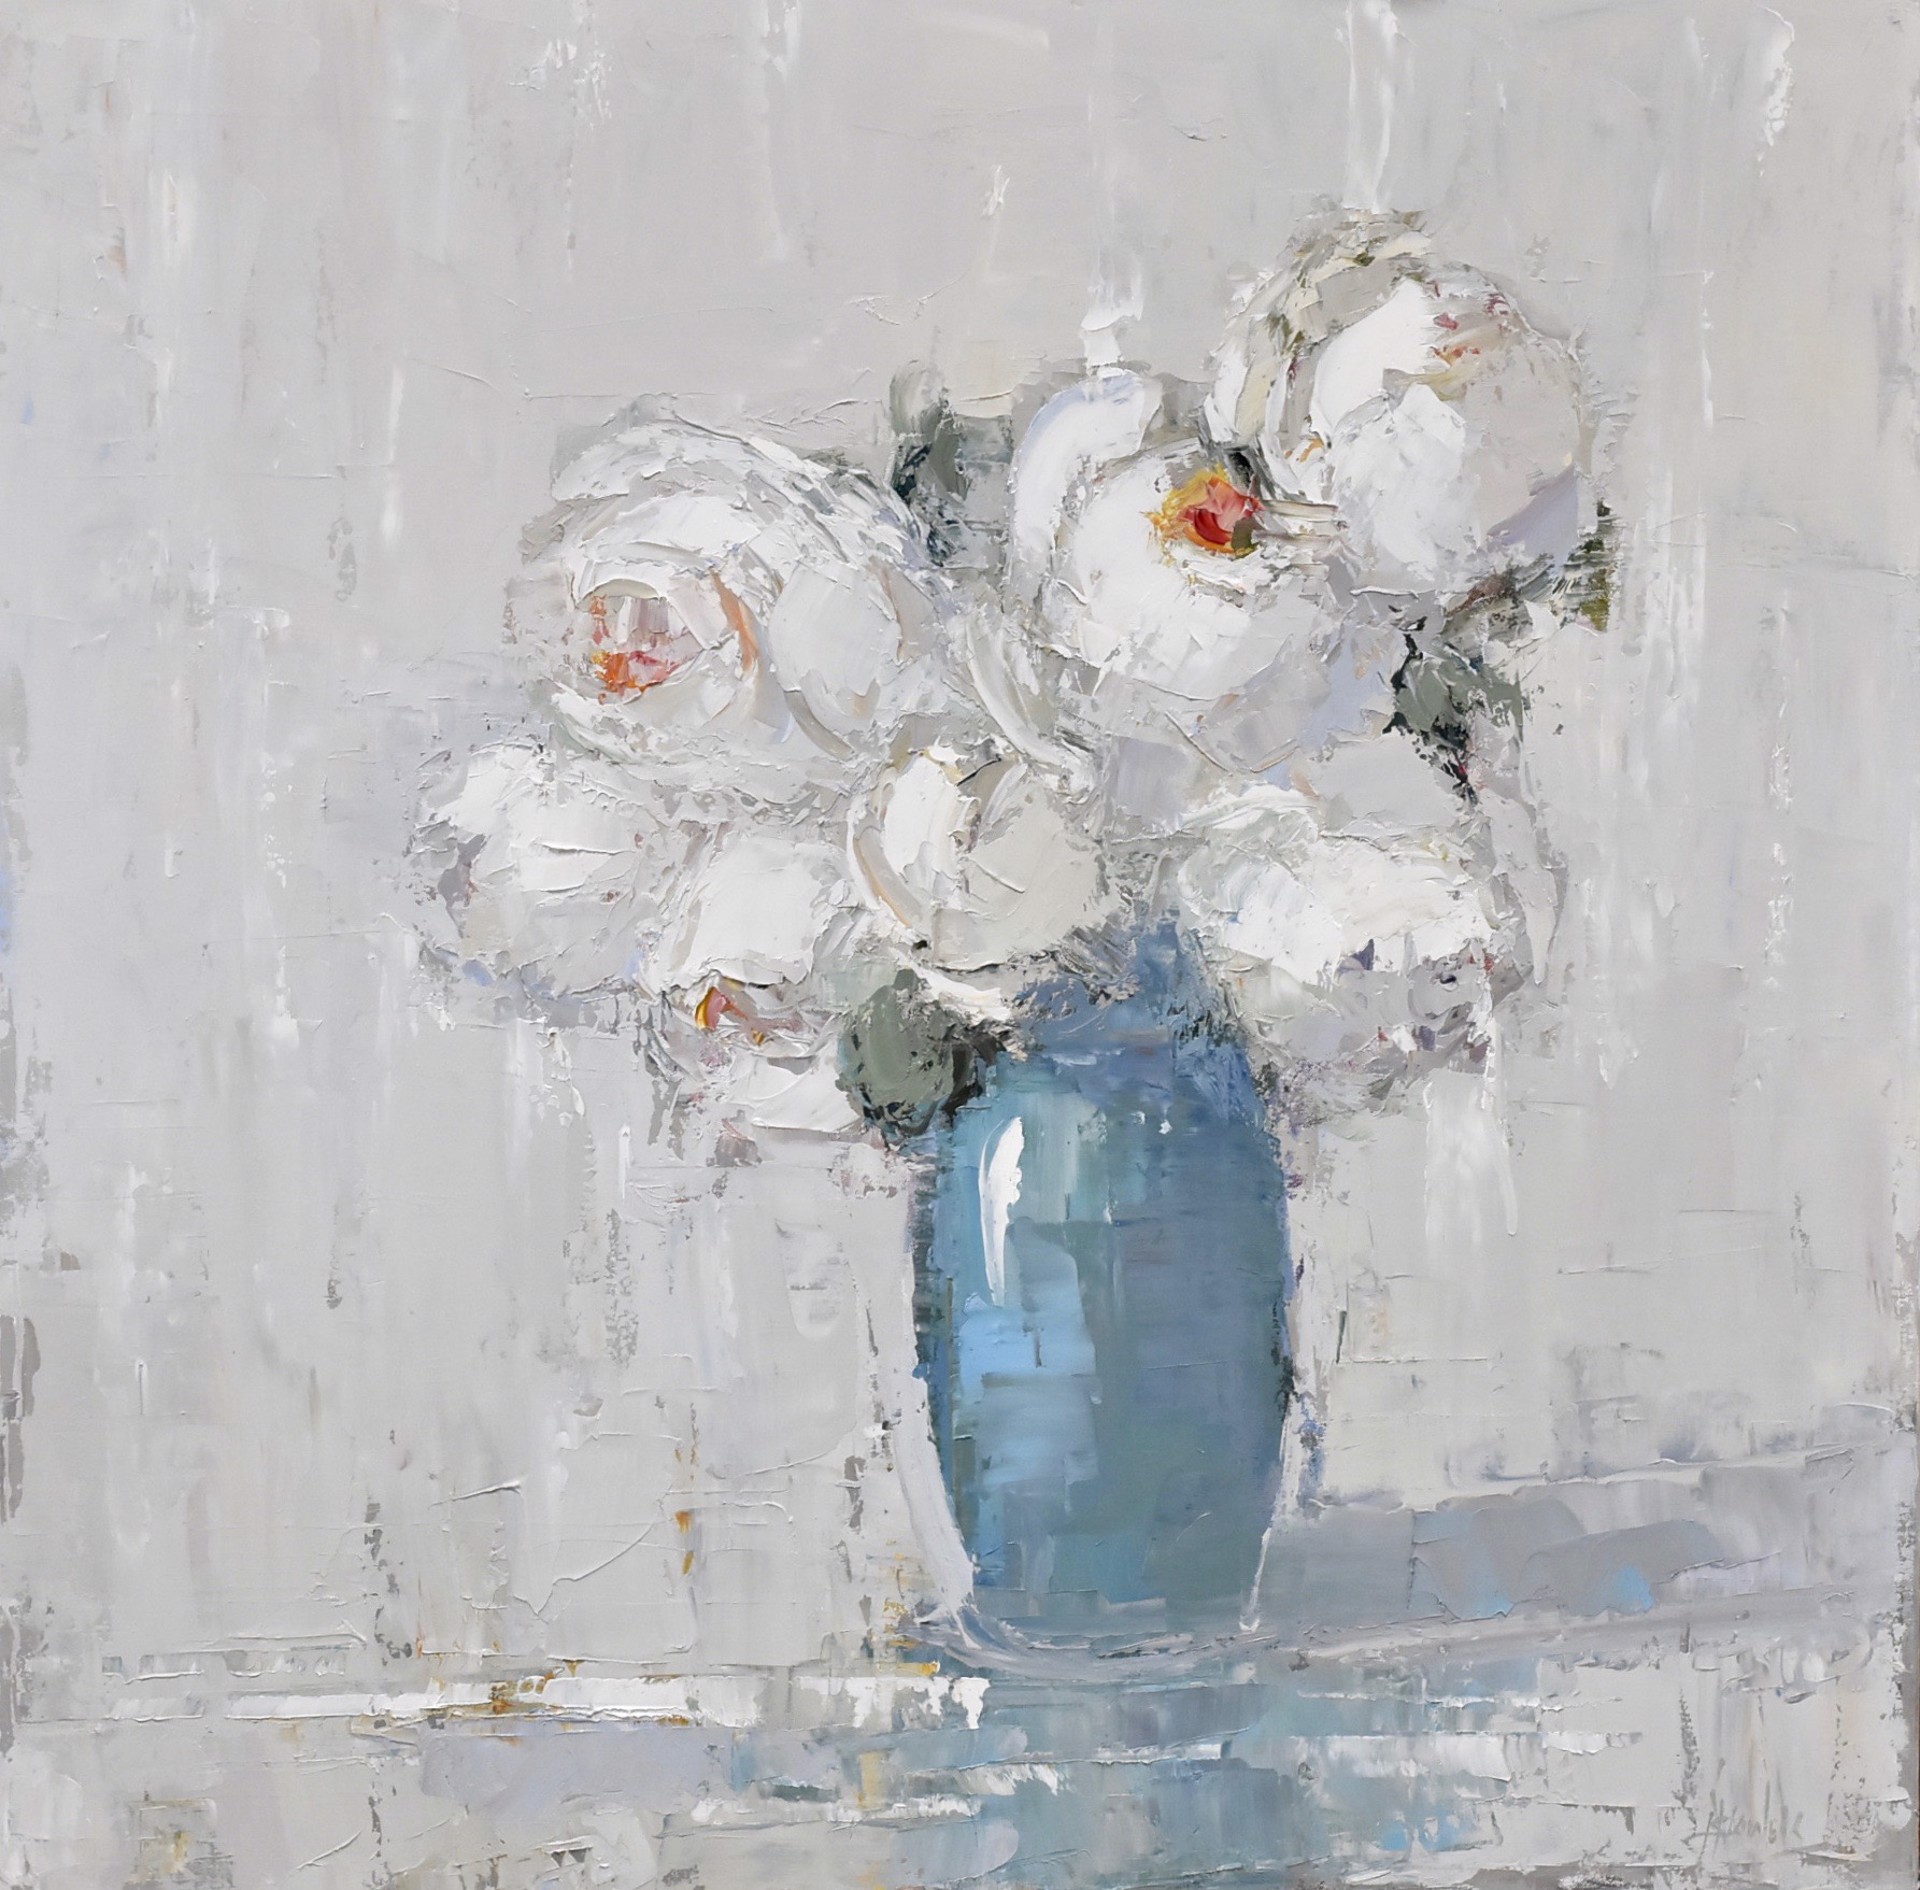 White Peonies by Barbara Flowers